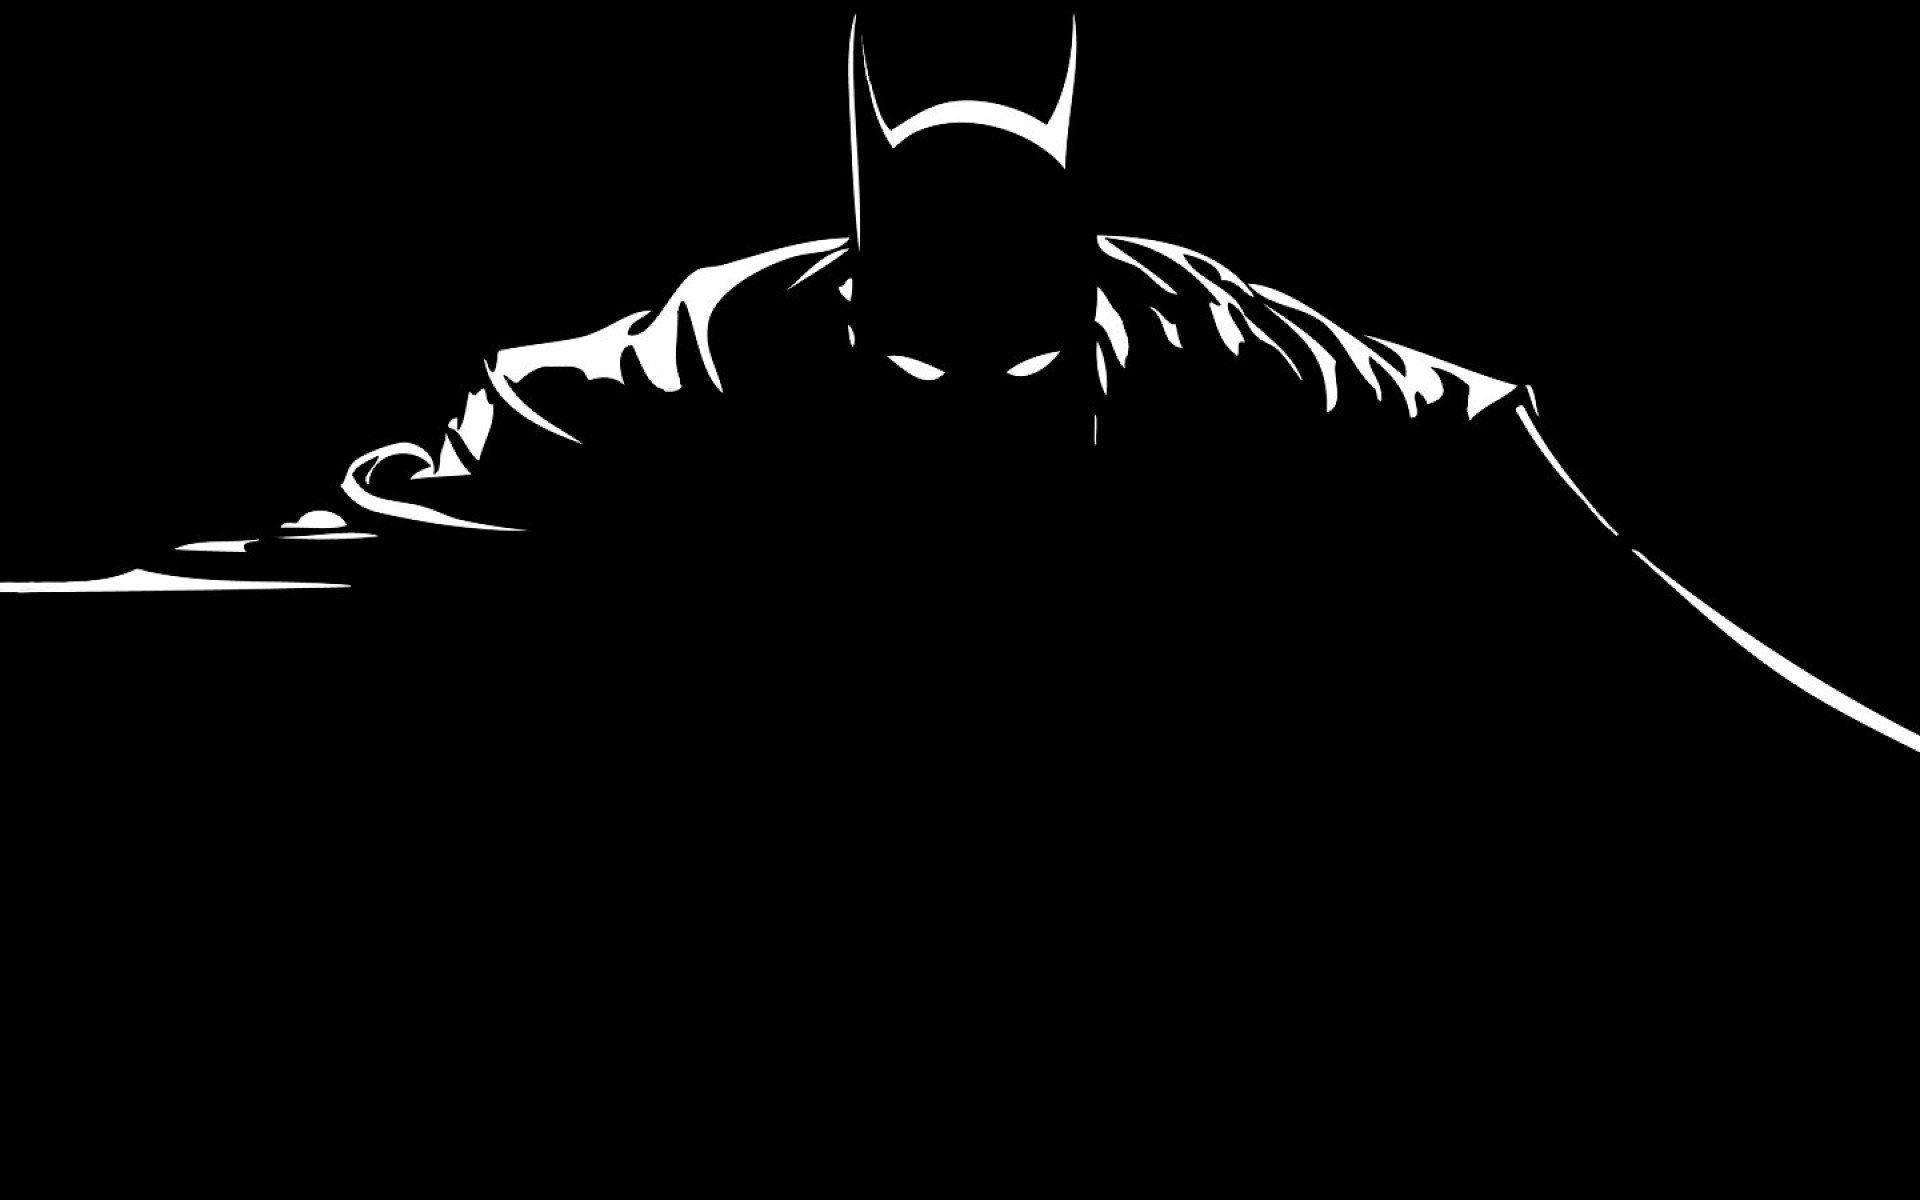 Batman black. Бэтмен на черном фоне. Темный силуэт. Силуэт на черном фоне. Черные обои.